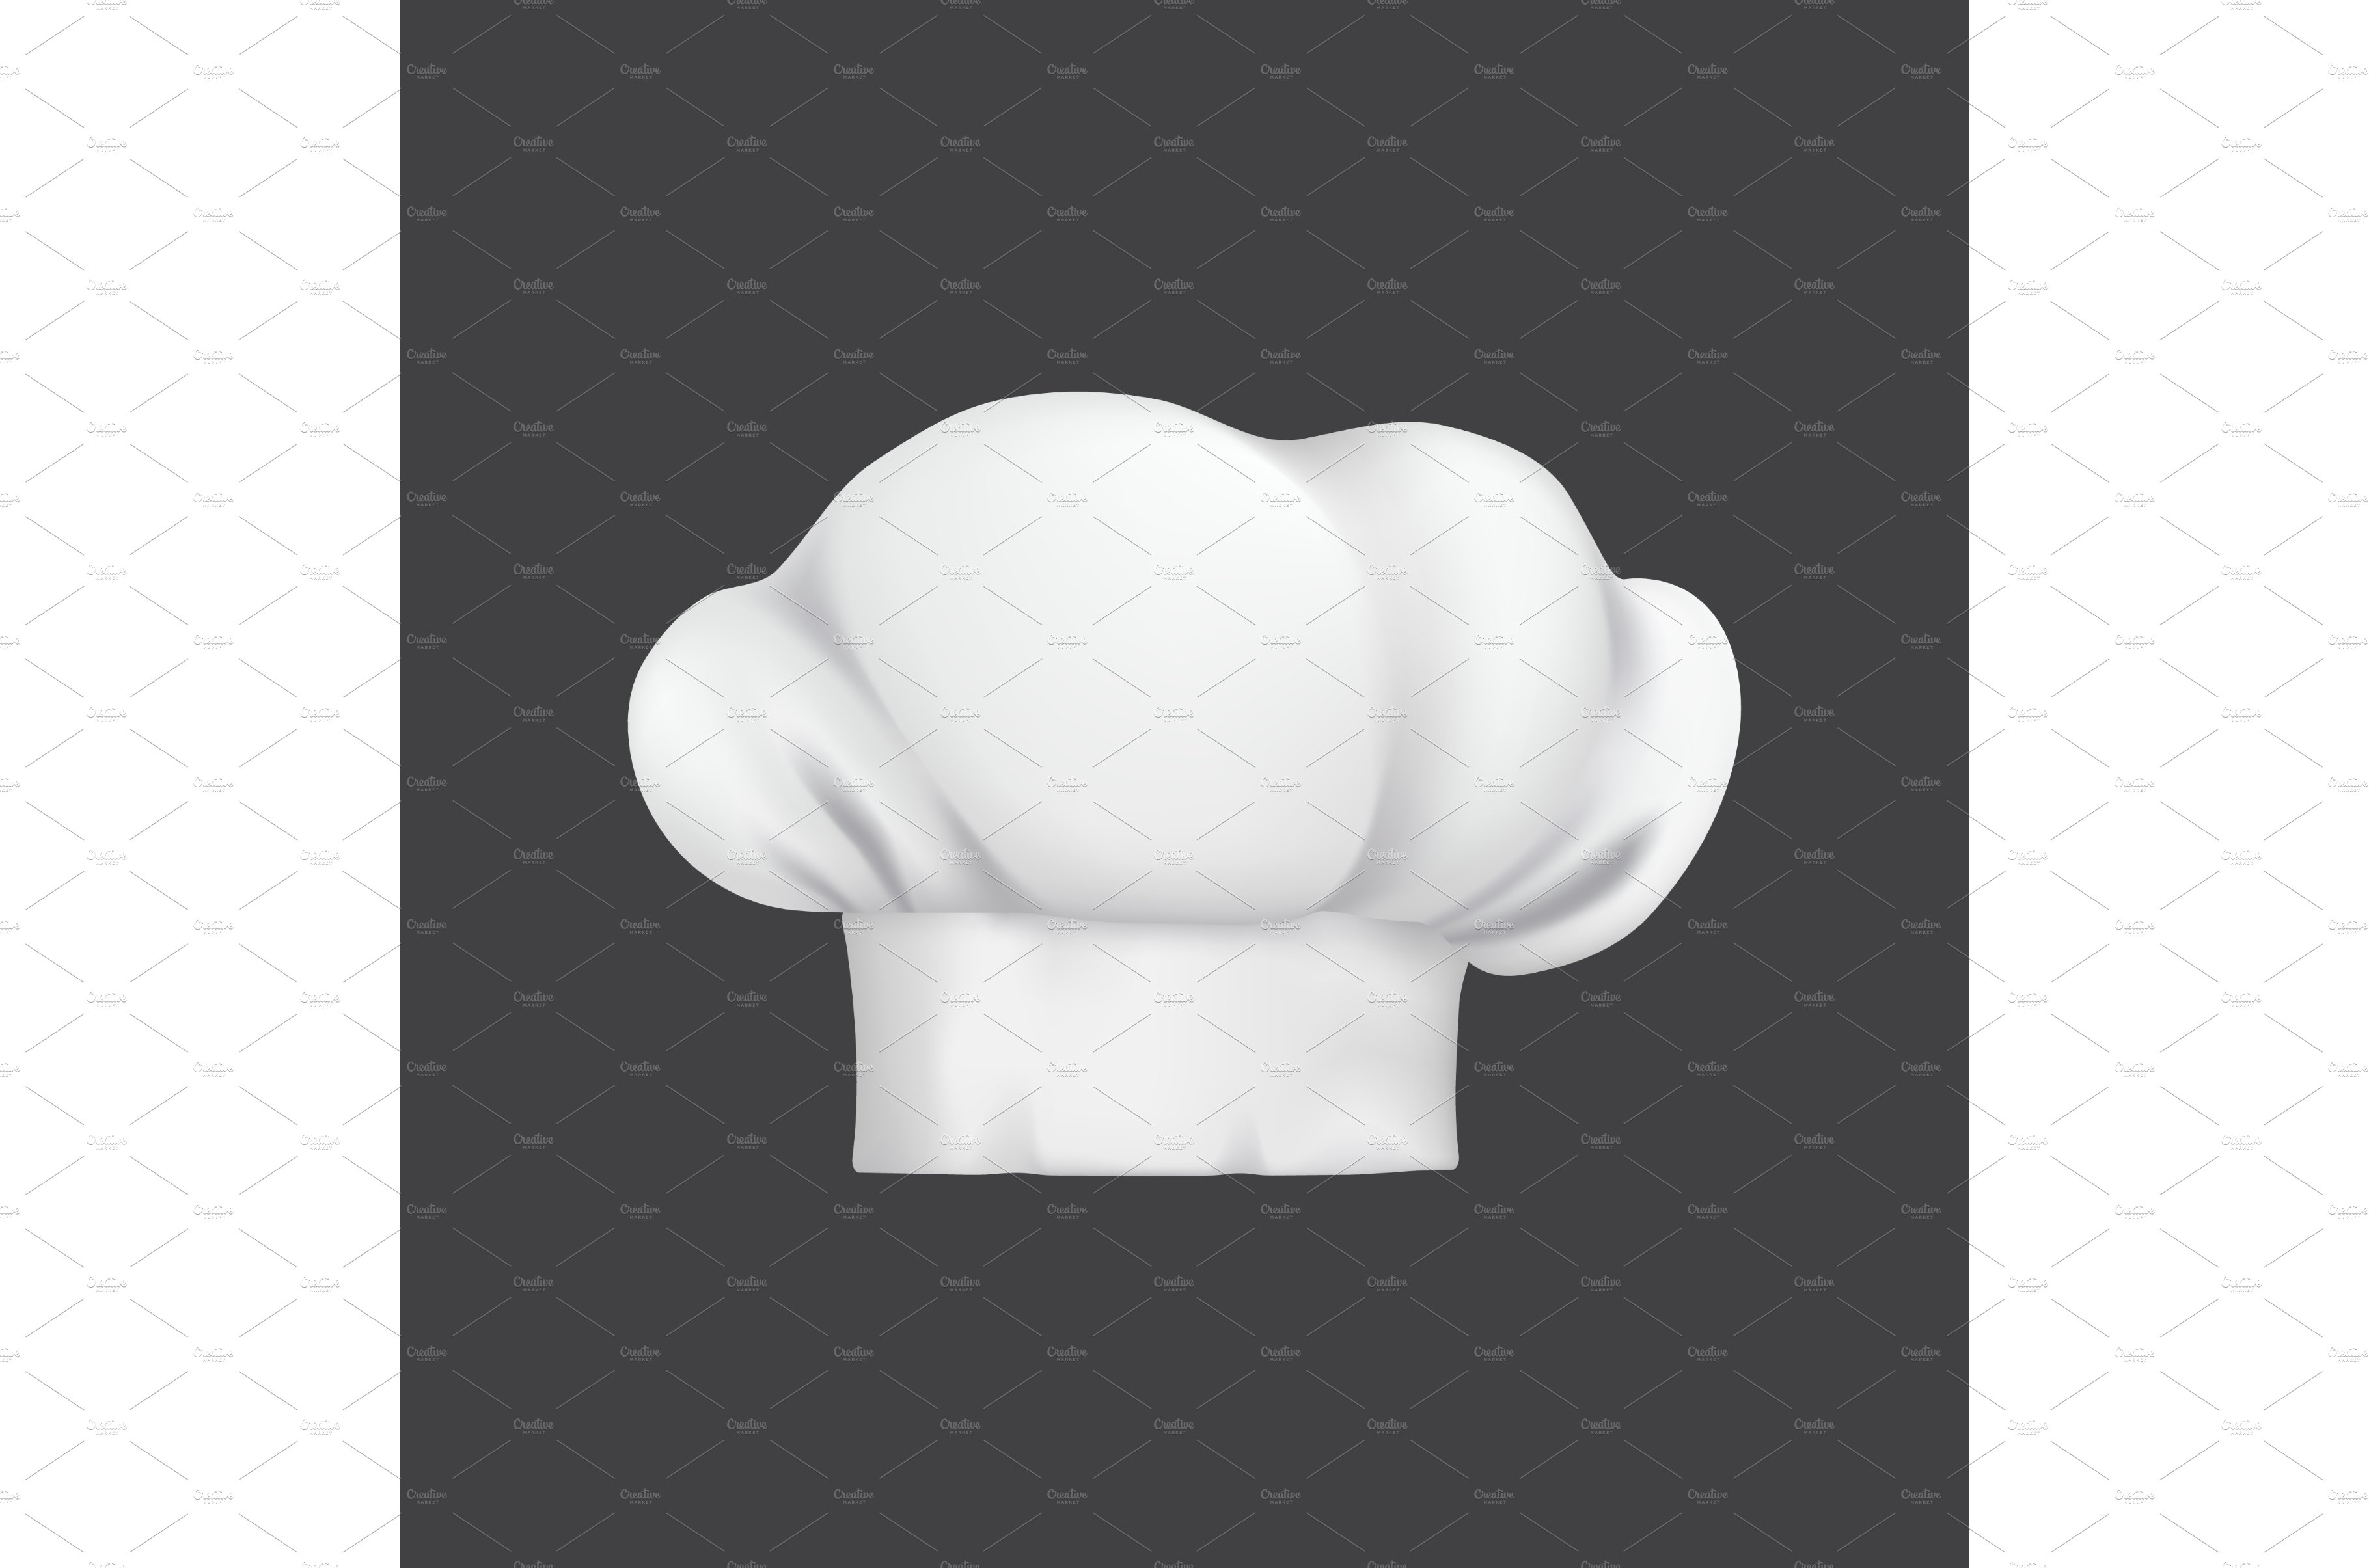 Restaurant chef hat, cook cap cover image.